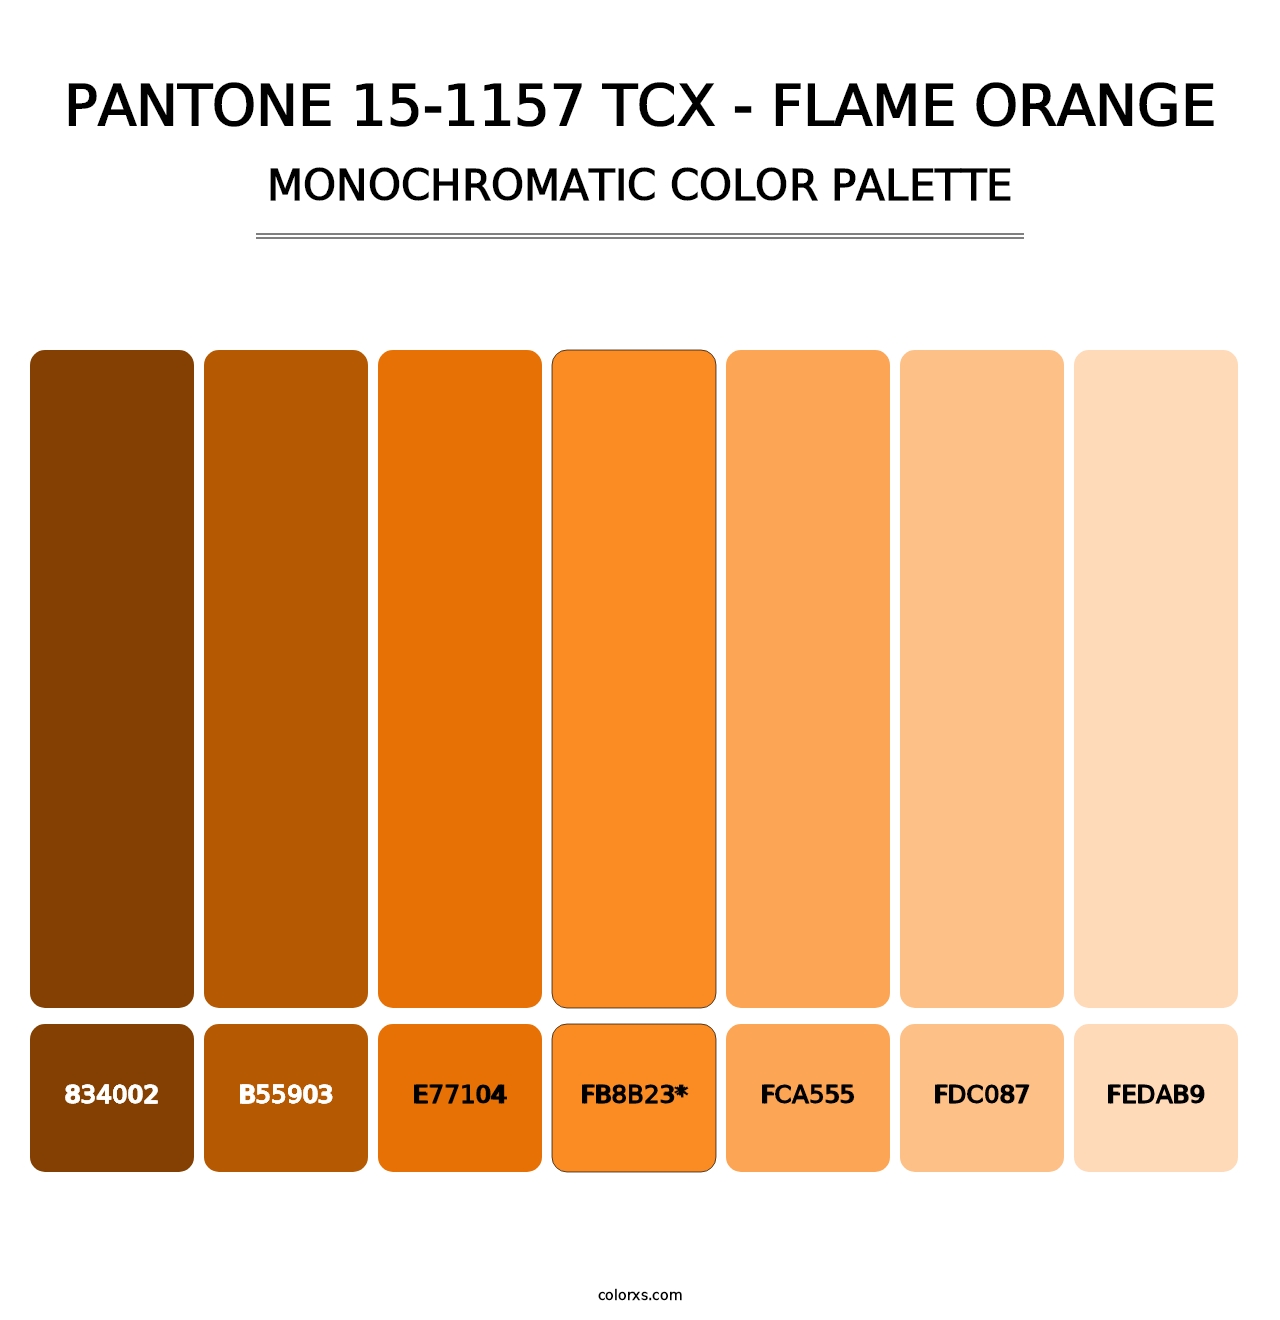 PANTONE 15-1157 TCX - Flame Orange - Monochromatic Color Palette